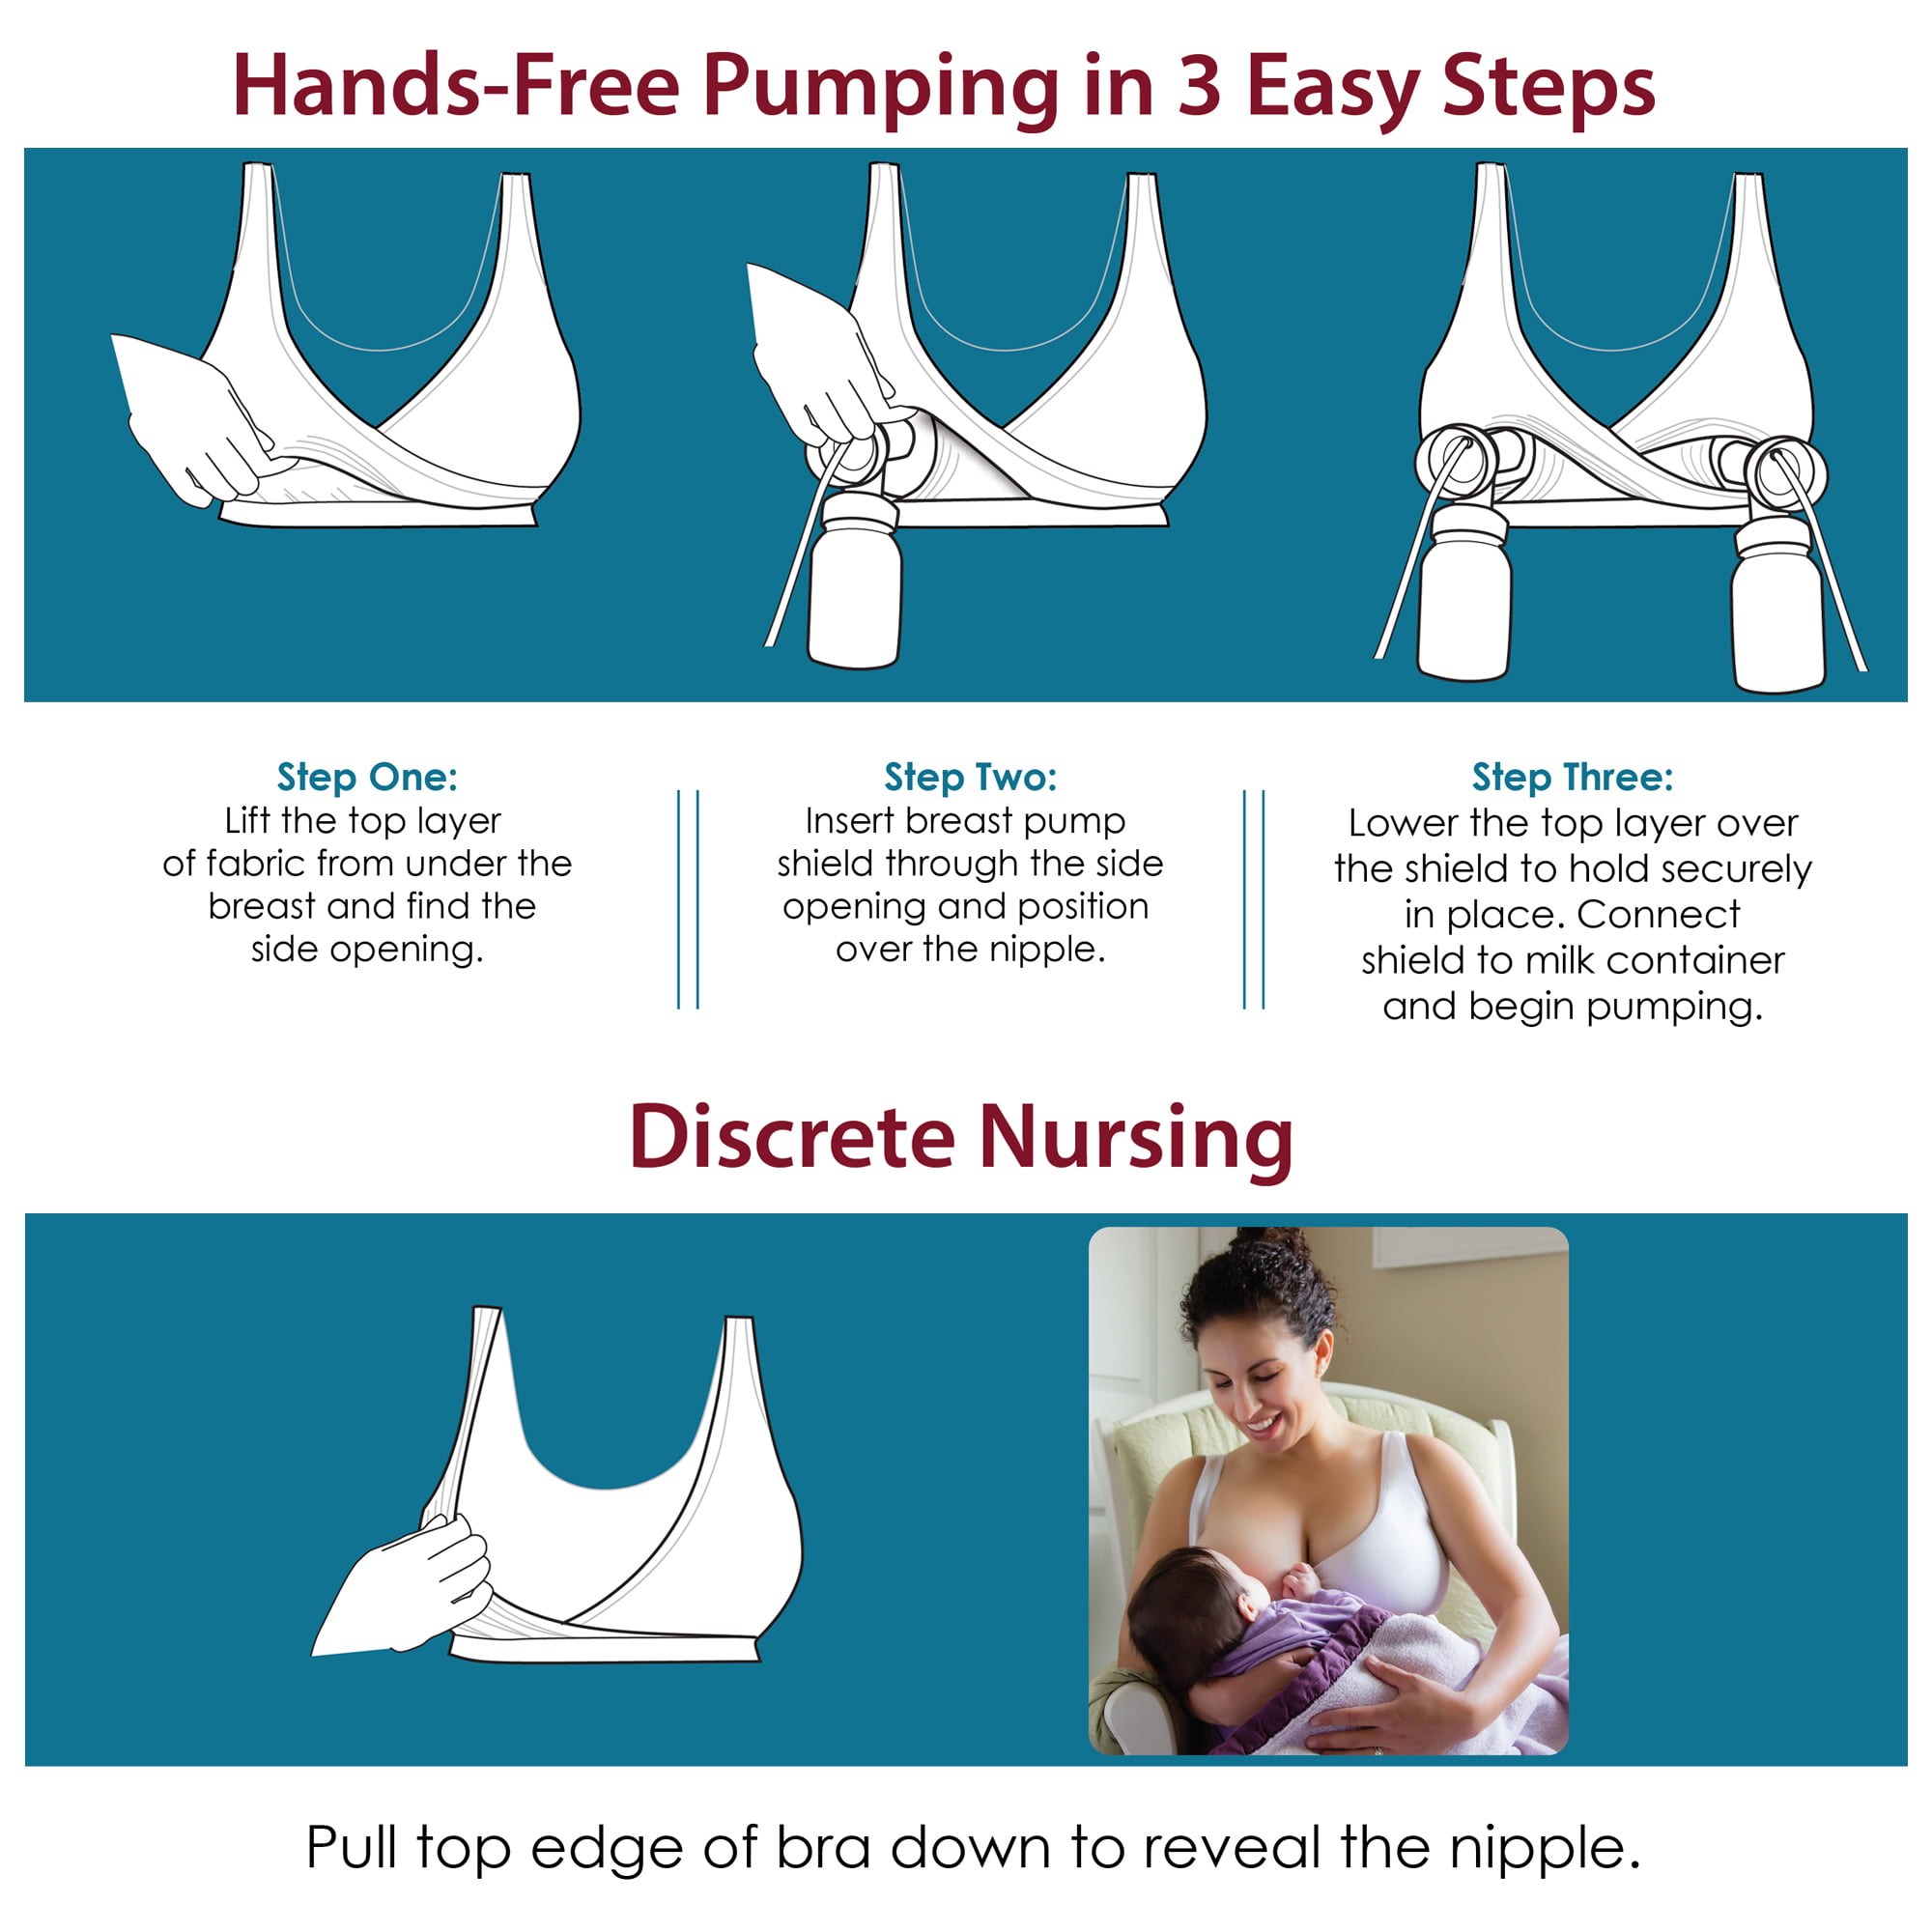 Rumina Hands Free Classic Pump&Nurse Adjustable Nursing Bra for Pumping.  Ideal for Breastfeeding Pumps by Spectra, Medela, Lansinoh, etc., Nude S